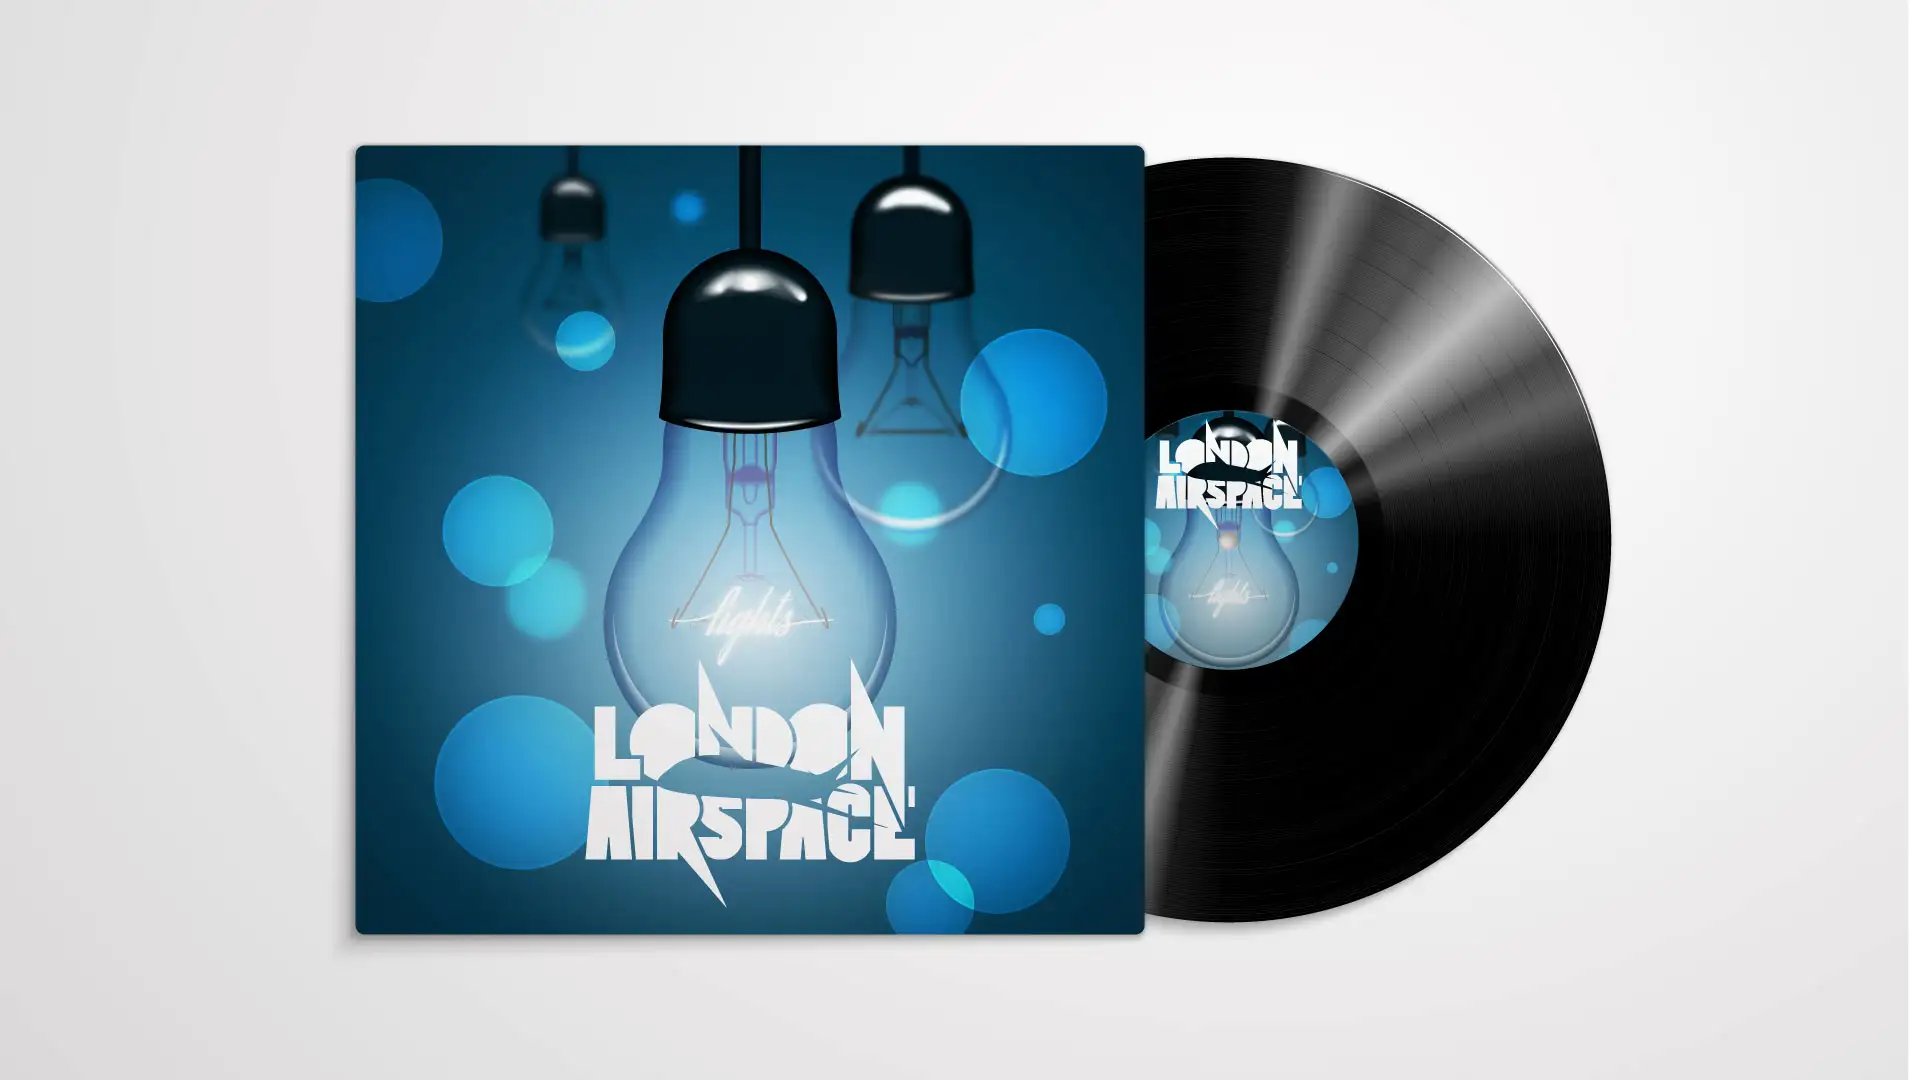 London Airspace vinyl album artwork designed by Dusty Drake